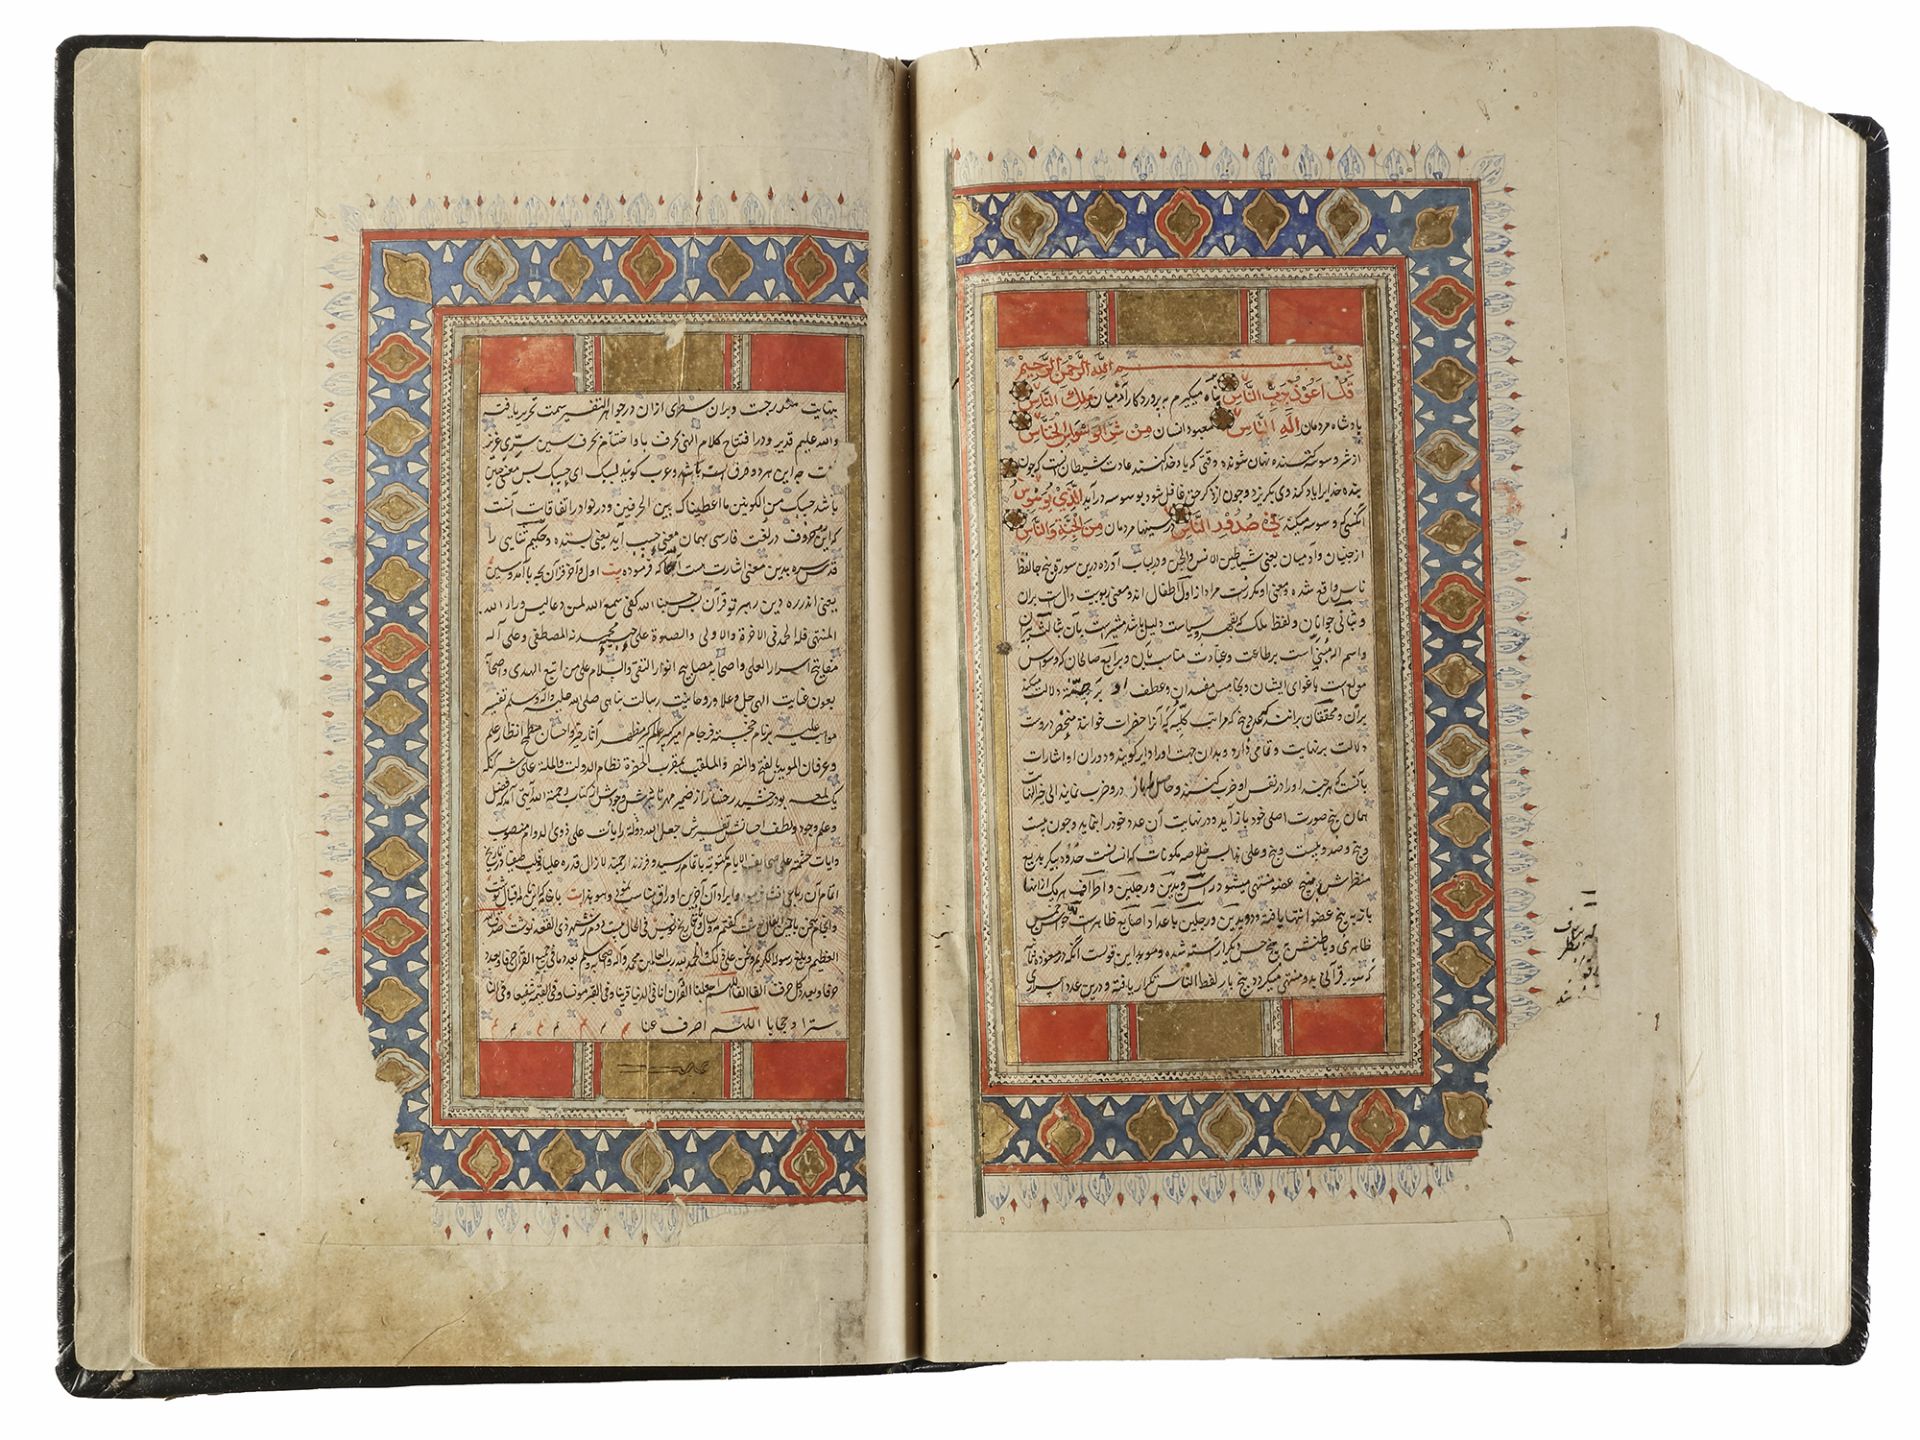 JAWAHER AL-TAFISR LE TOHFAT AL-AMIR BY HUSAIN KASHEFI, SULTANATE INDIA, 897 AH/149 AD - Image 10 of 11